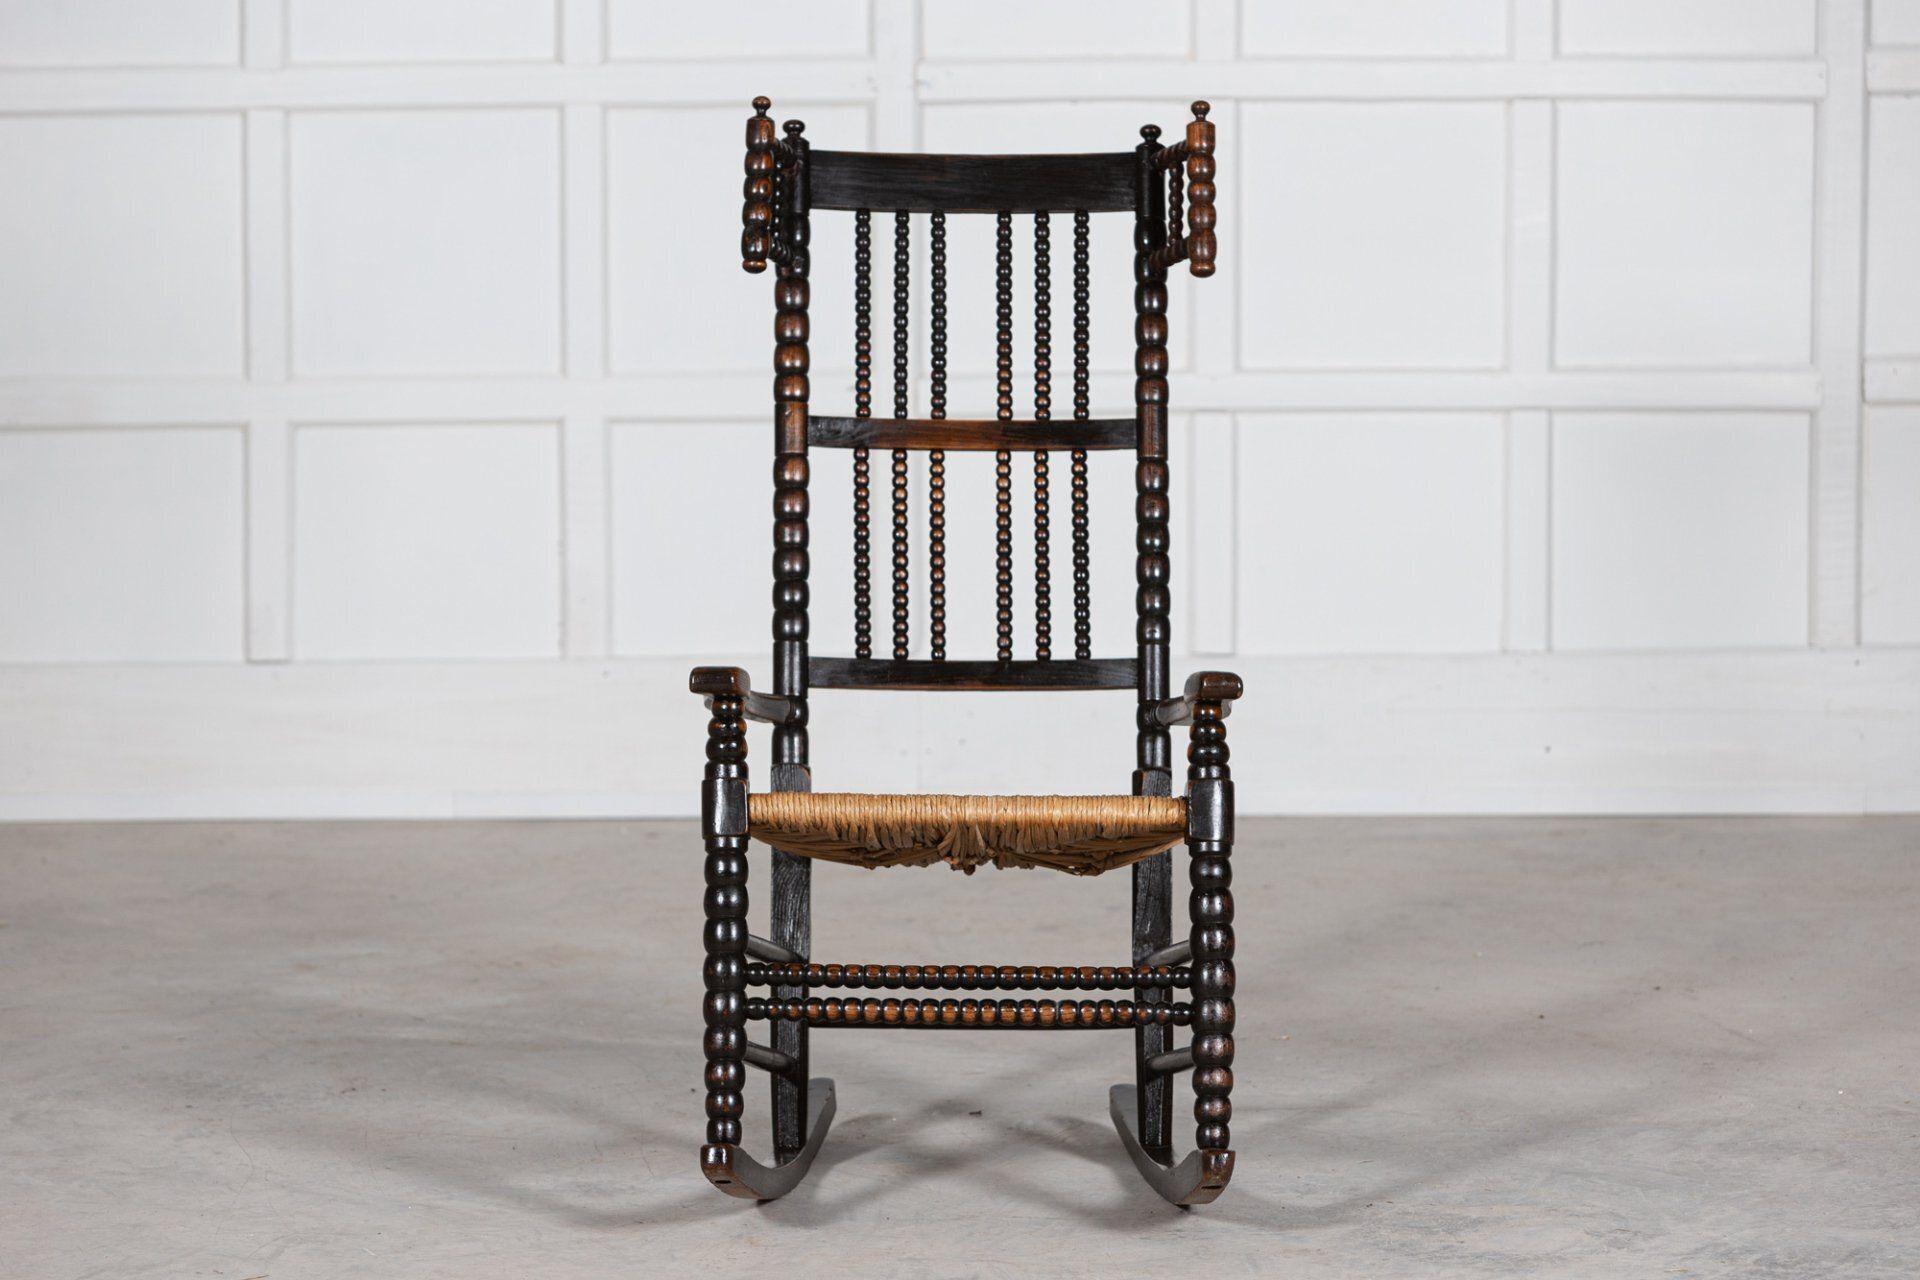 circa 1890
English Arts & Crafts Ernest Gimson style Ash & Elm Bobbin Turned Rocking Chair
An Exceptional Example
Lightly Restored
sku 1160
W52 x D70 x H109cm
Sh 46cm